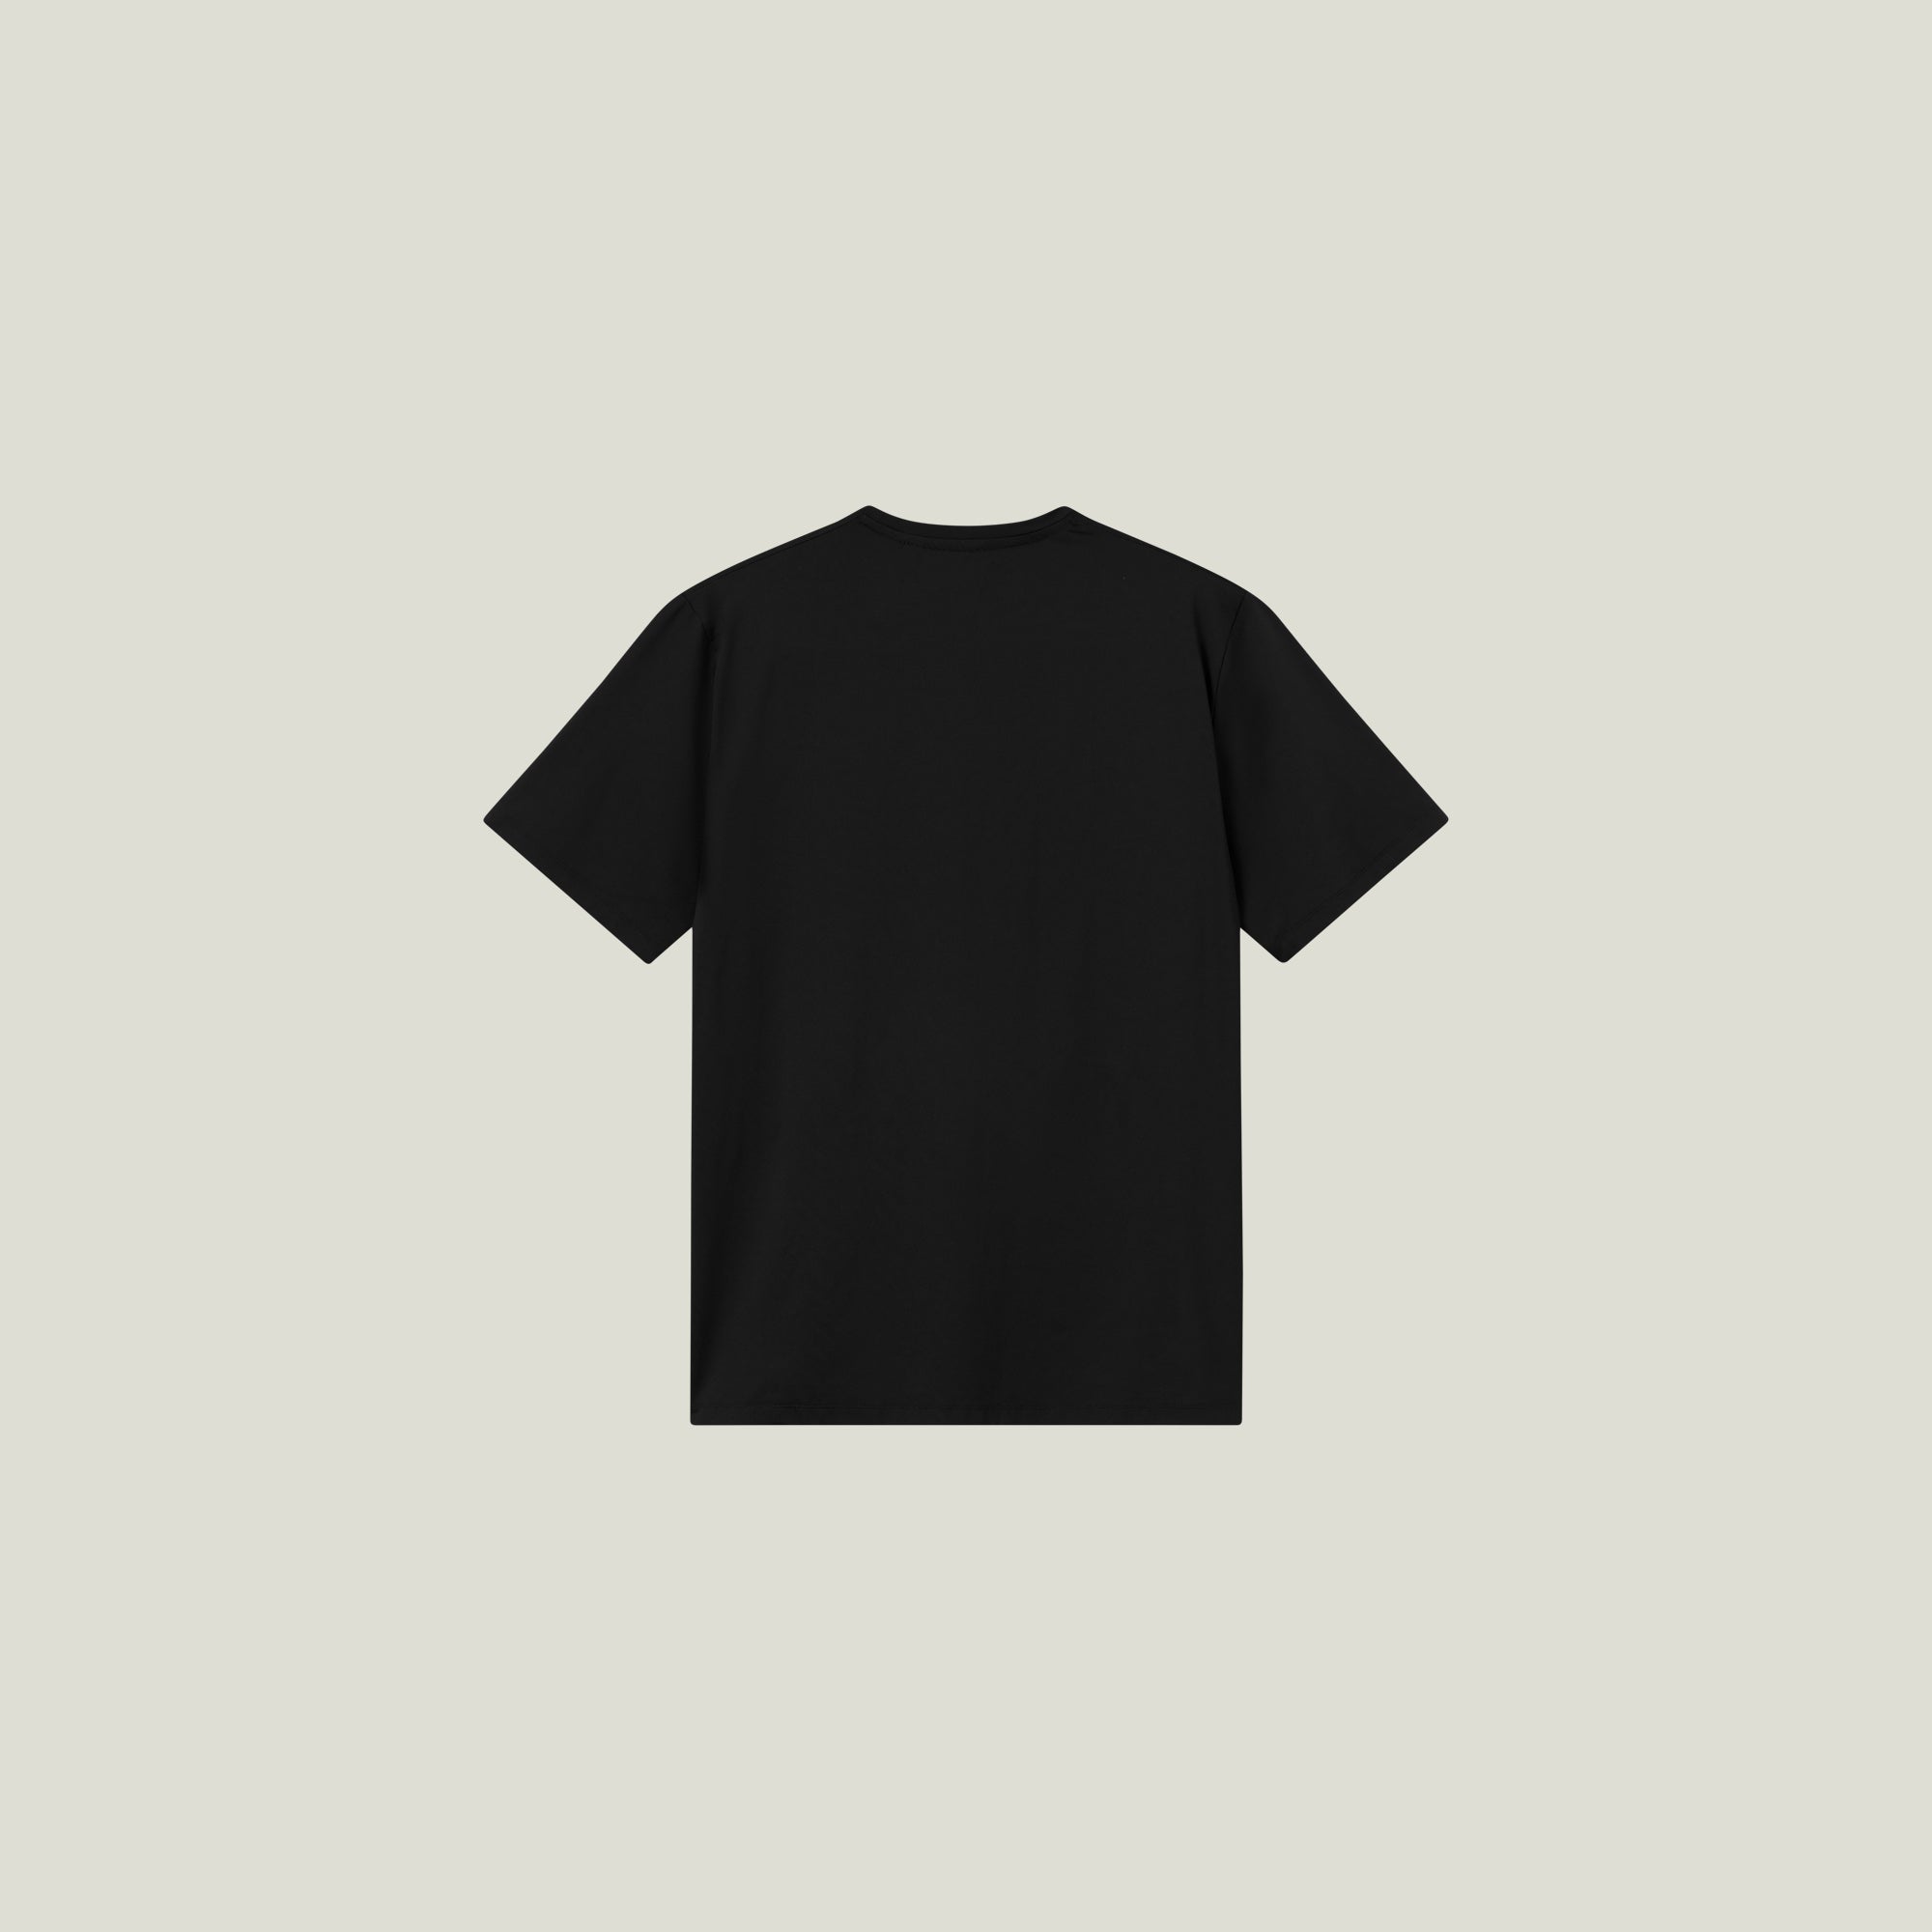 Cuera Oncourt WPC T-shirt (Black)